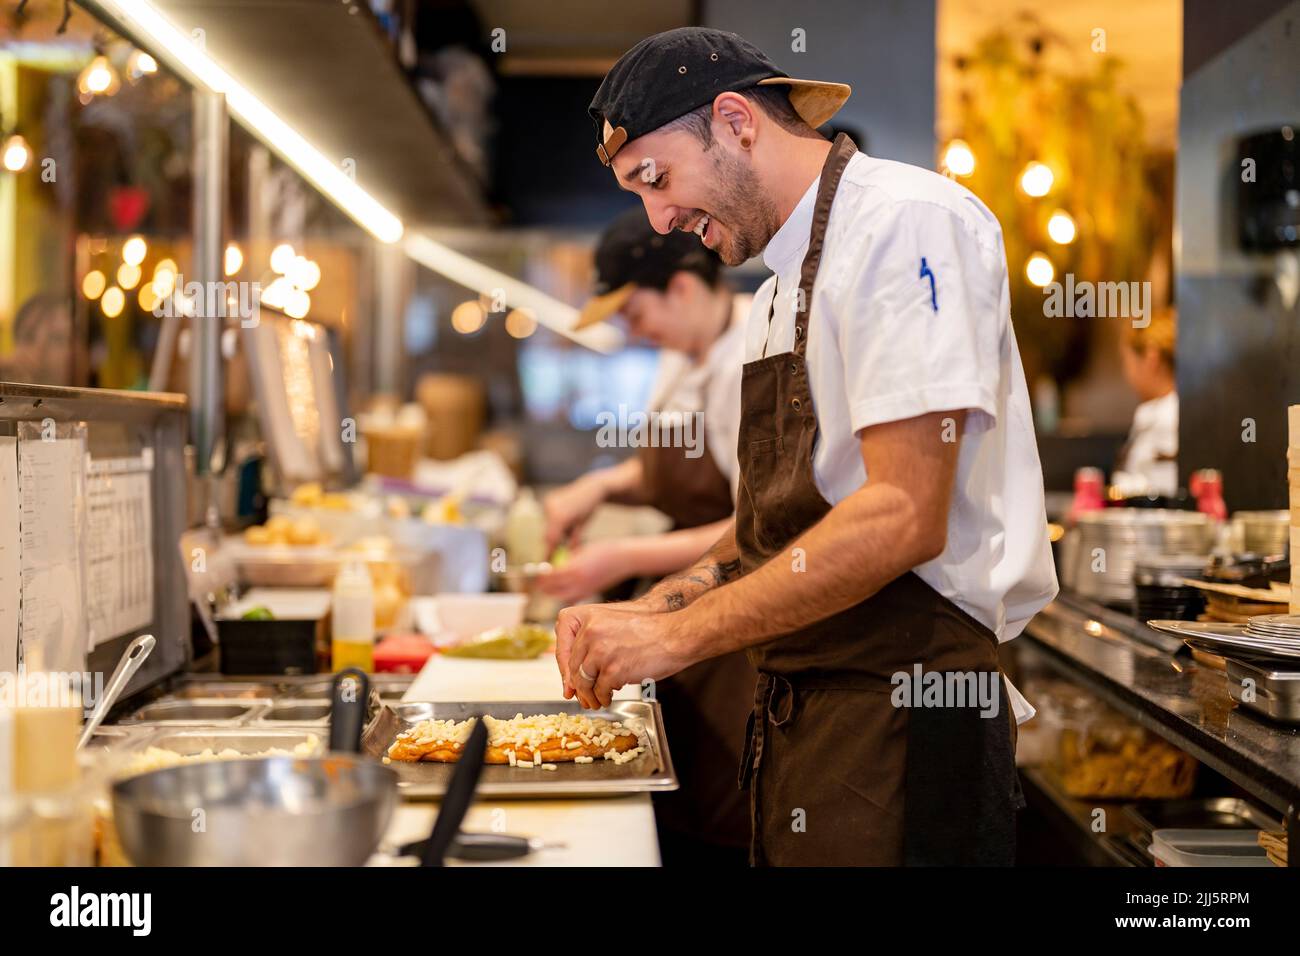 Smiling chef preparing food at restaurant kitchen Stock Photo